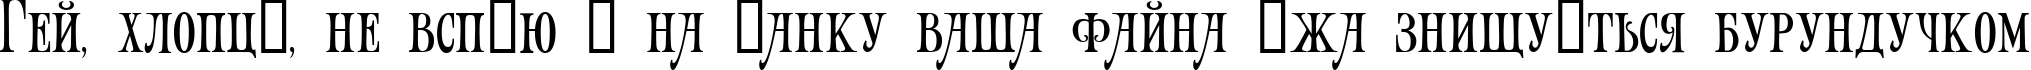 Пример написания шрифтом Art-Victorian текста на украинском